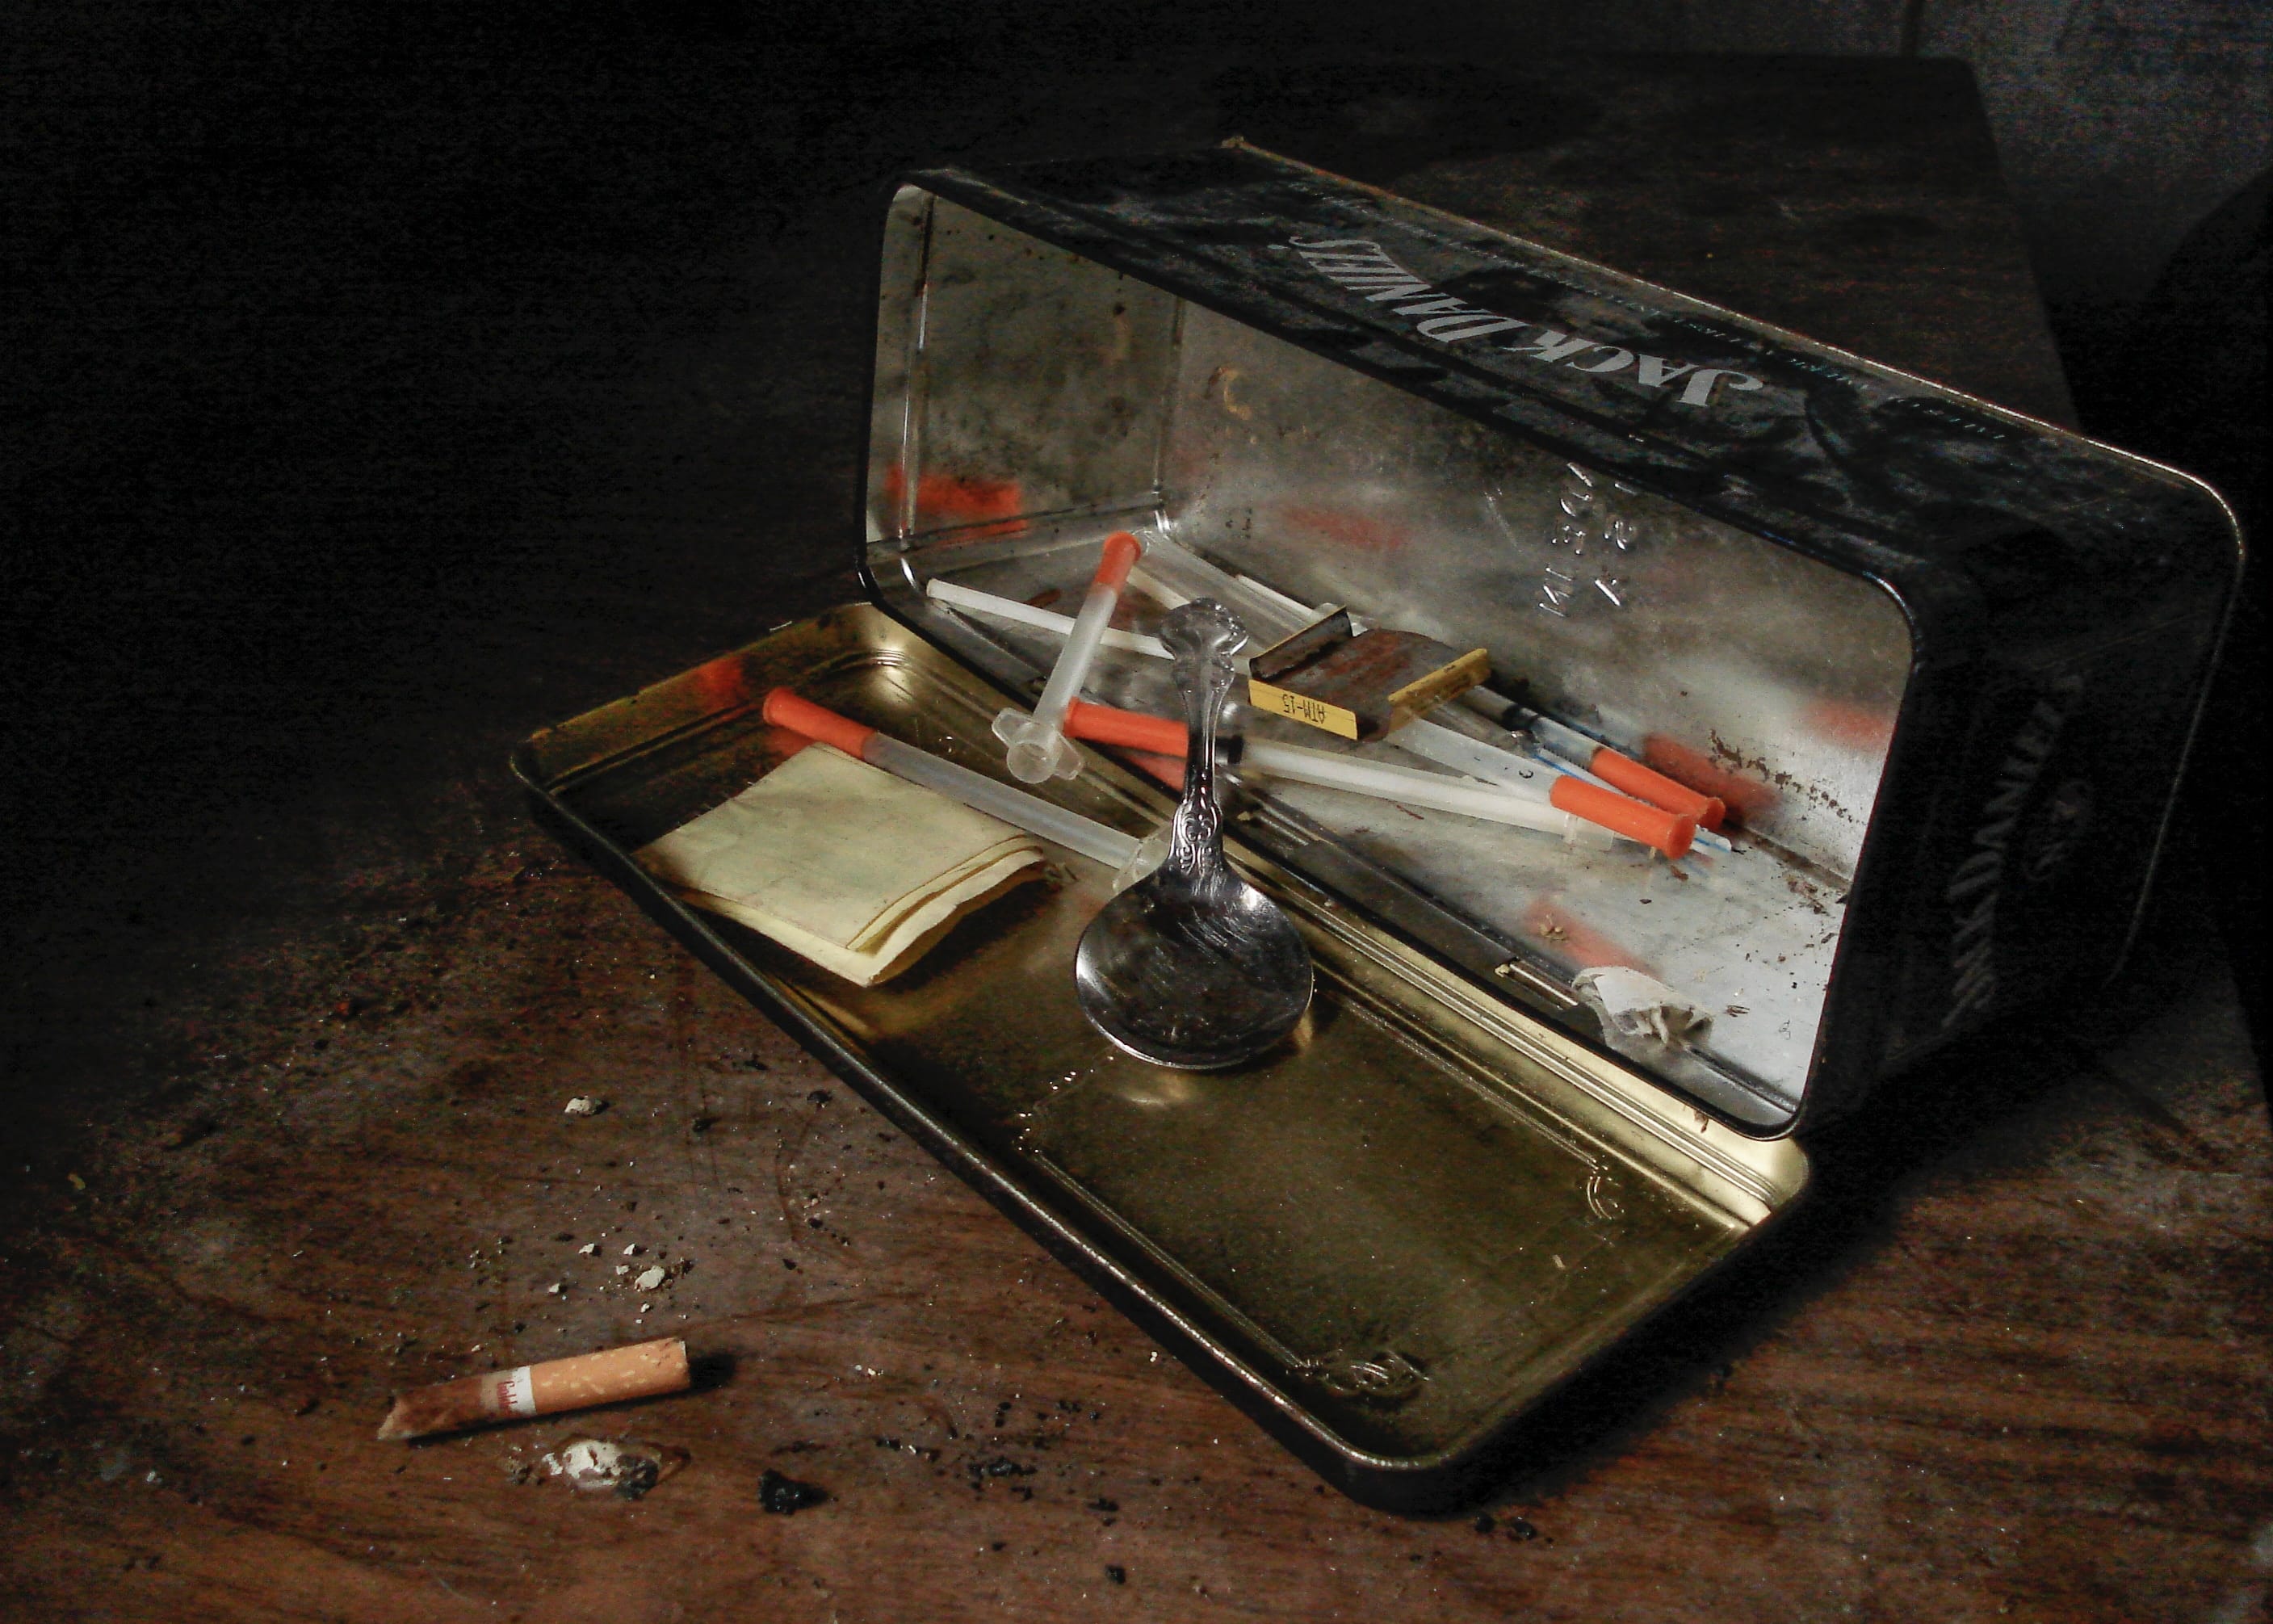 Syringes and spoon in metal storage box; image by Matthew T. Rader, via Unsplash.com.